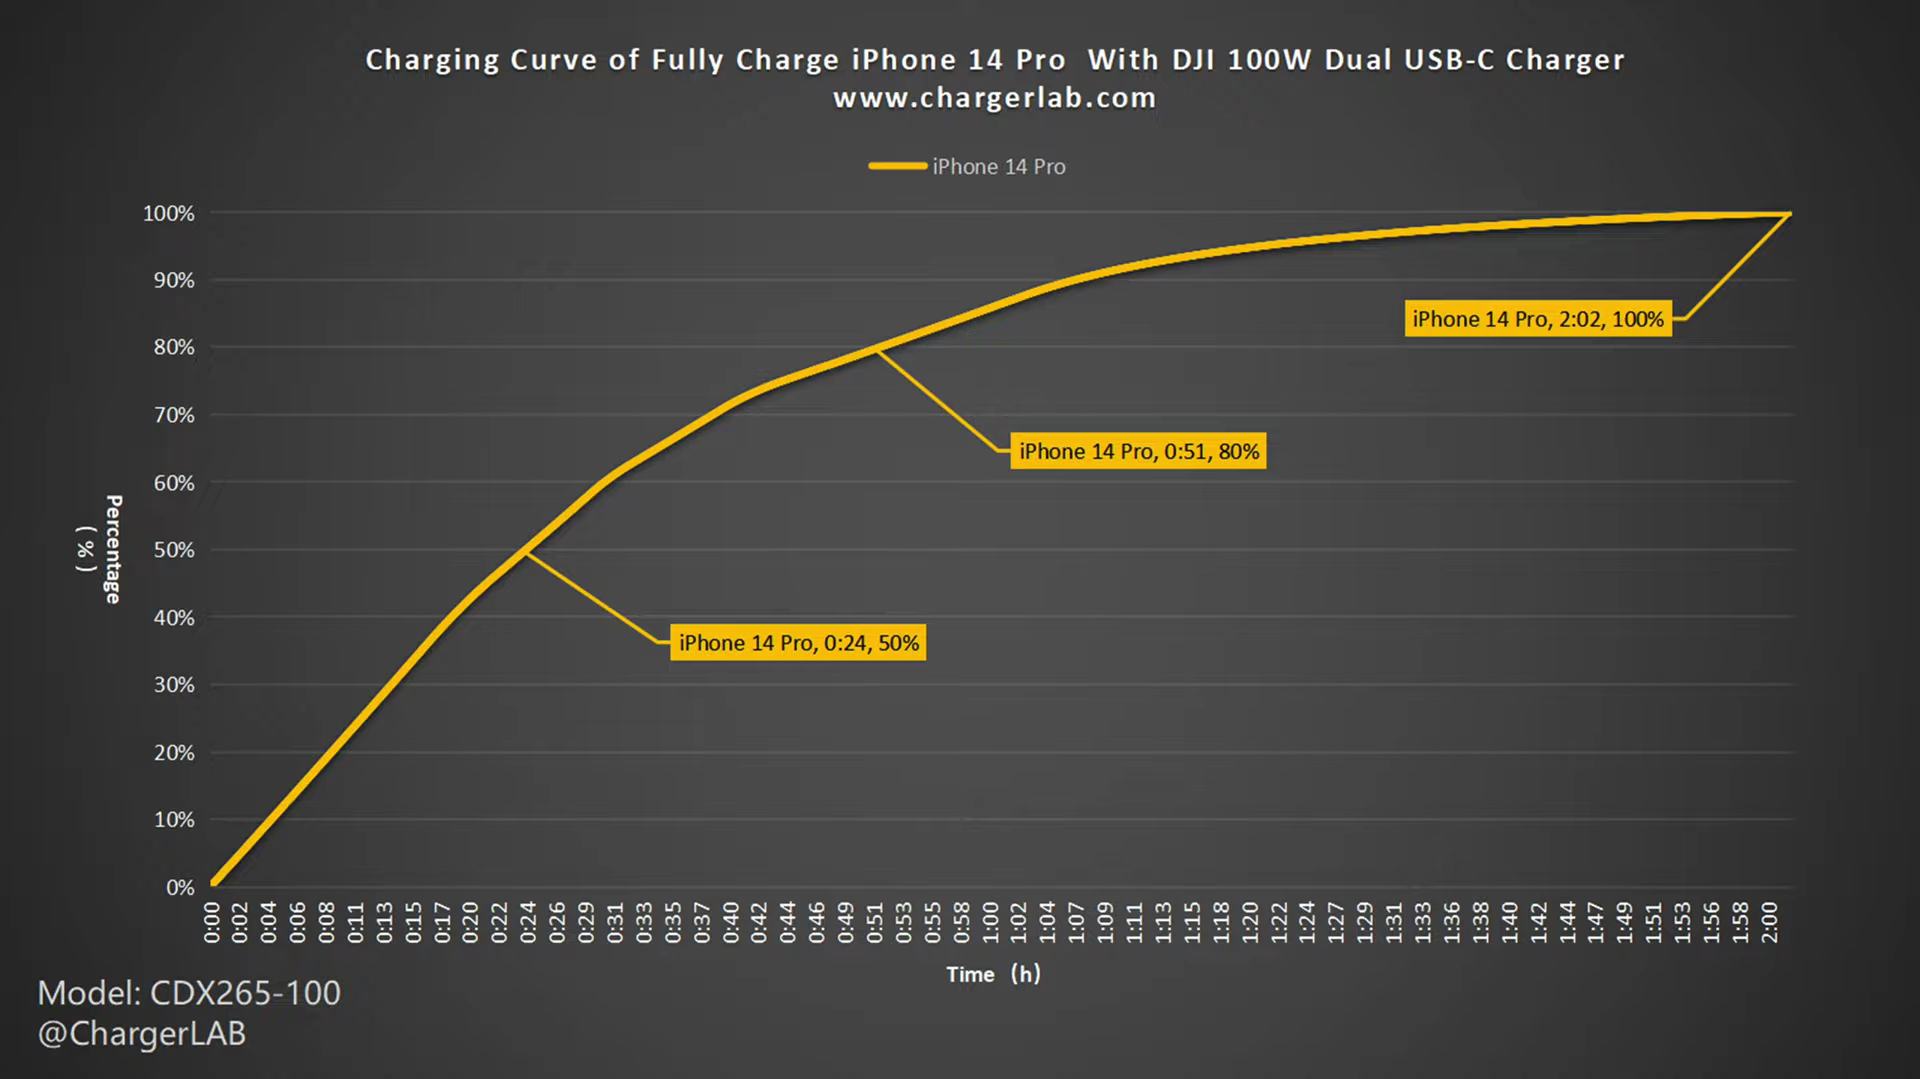 DJI 100W Dual USB-C GaN Power Adapter Review-Chargerlab